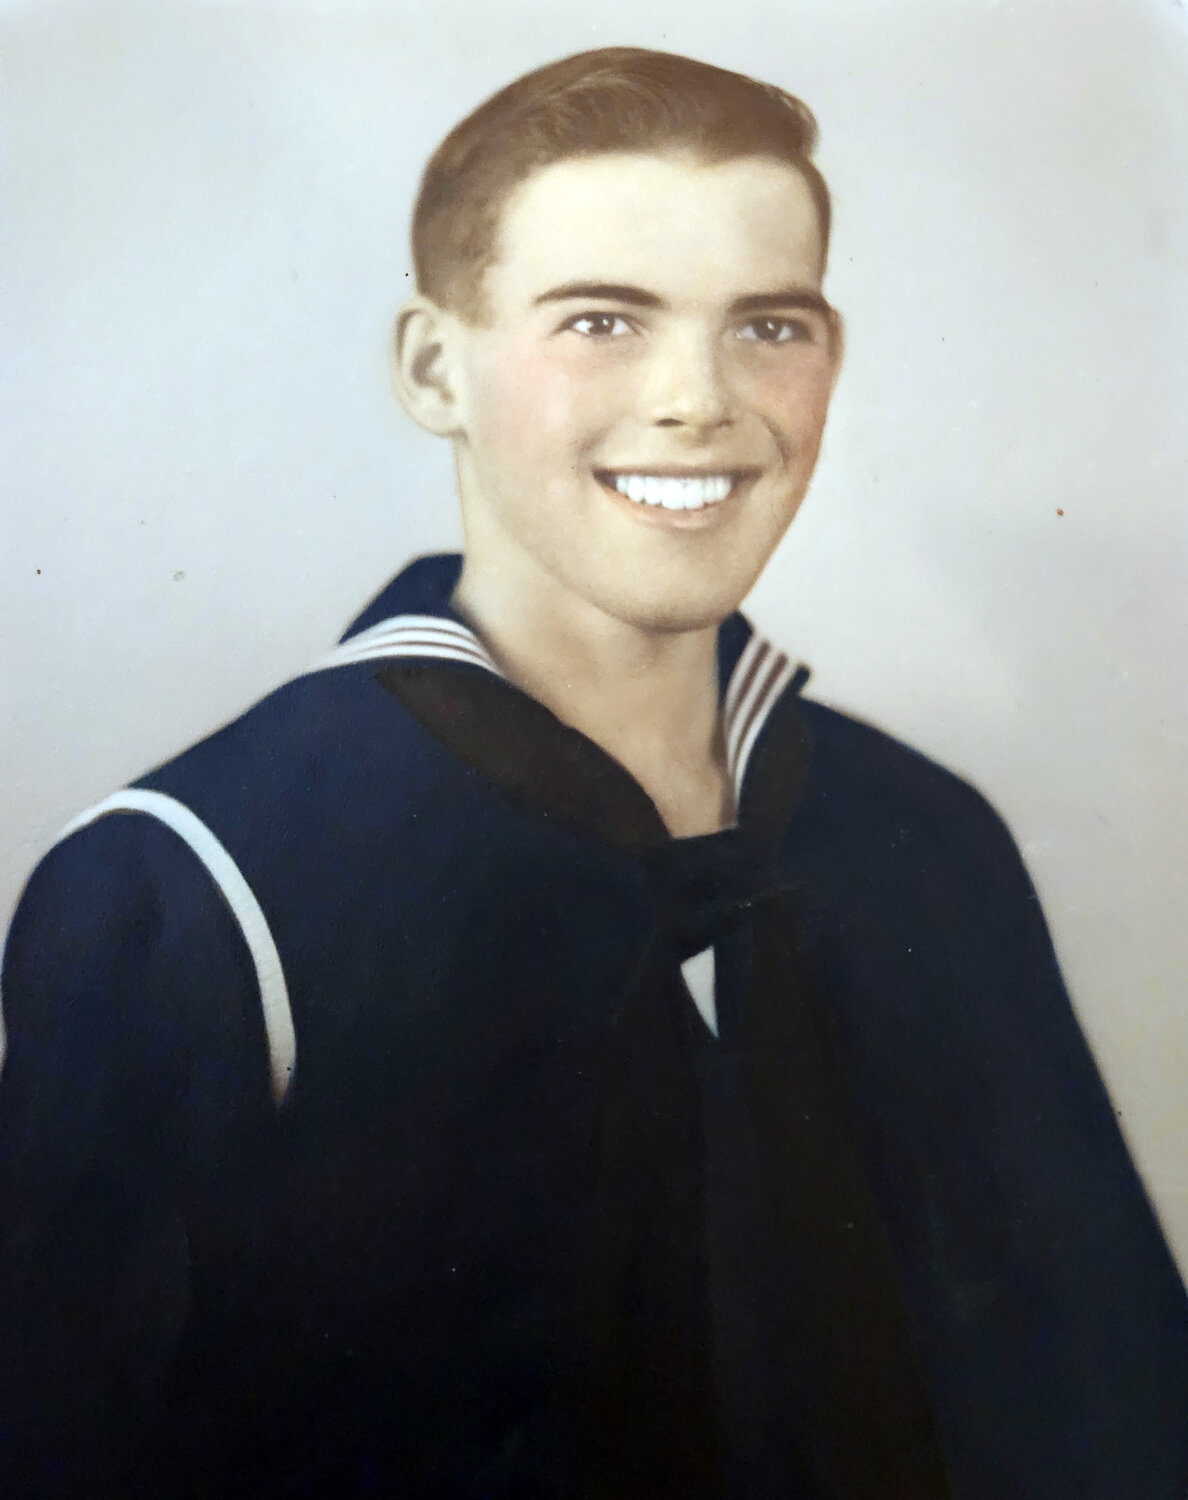 Bill Murdock enlisted in the U.S. Navy